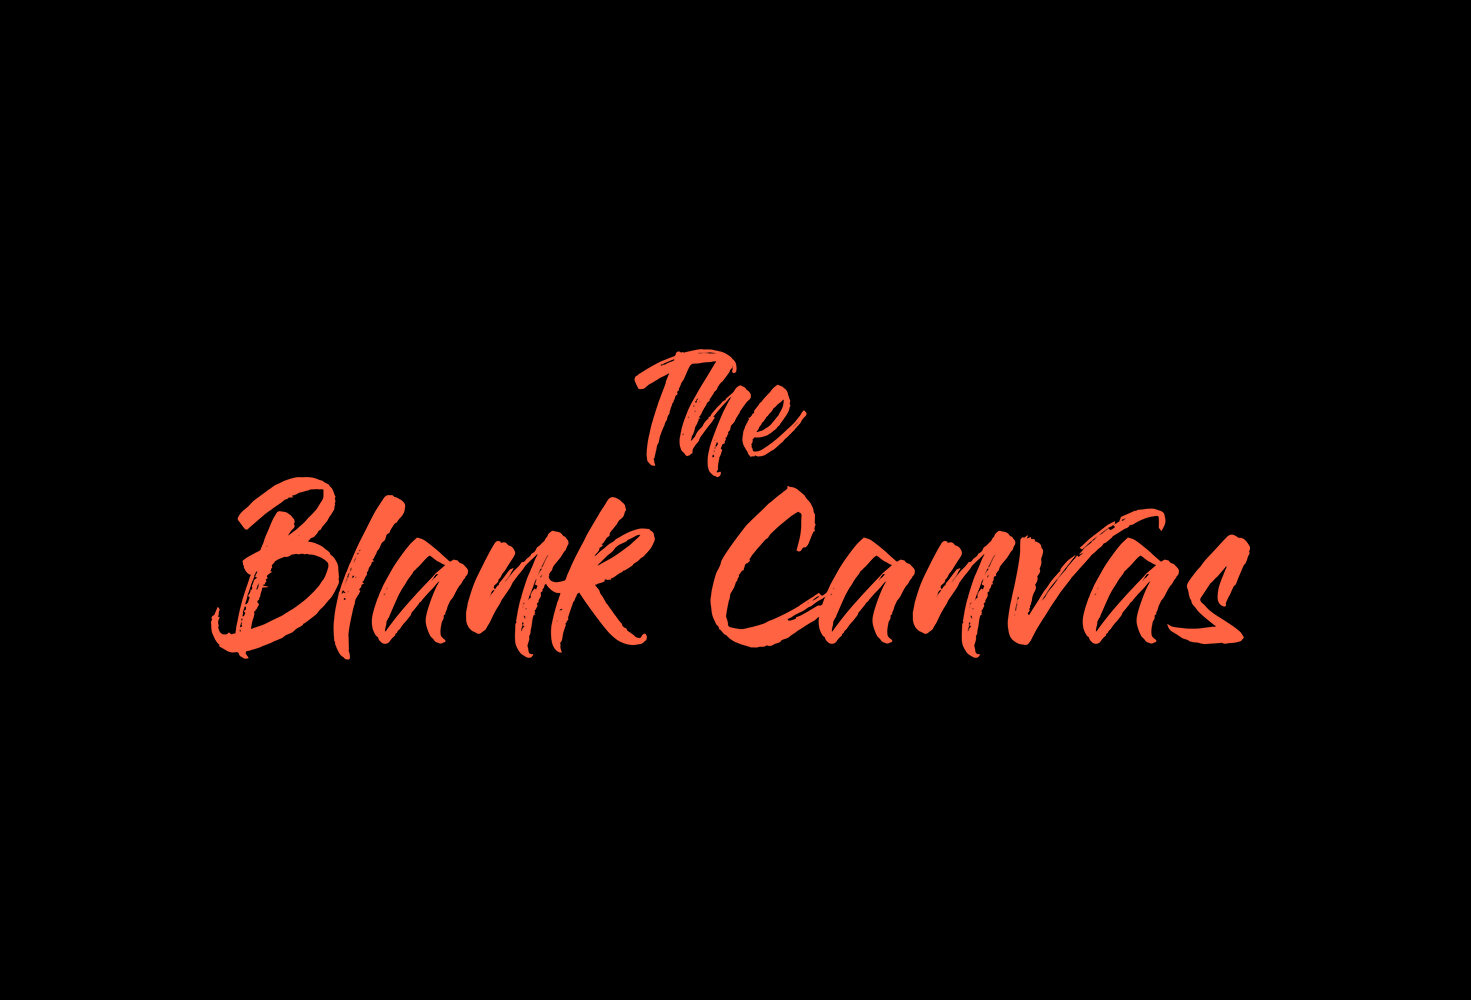 TheBlankCanvas_logo.jpg